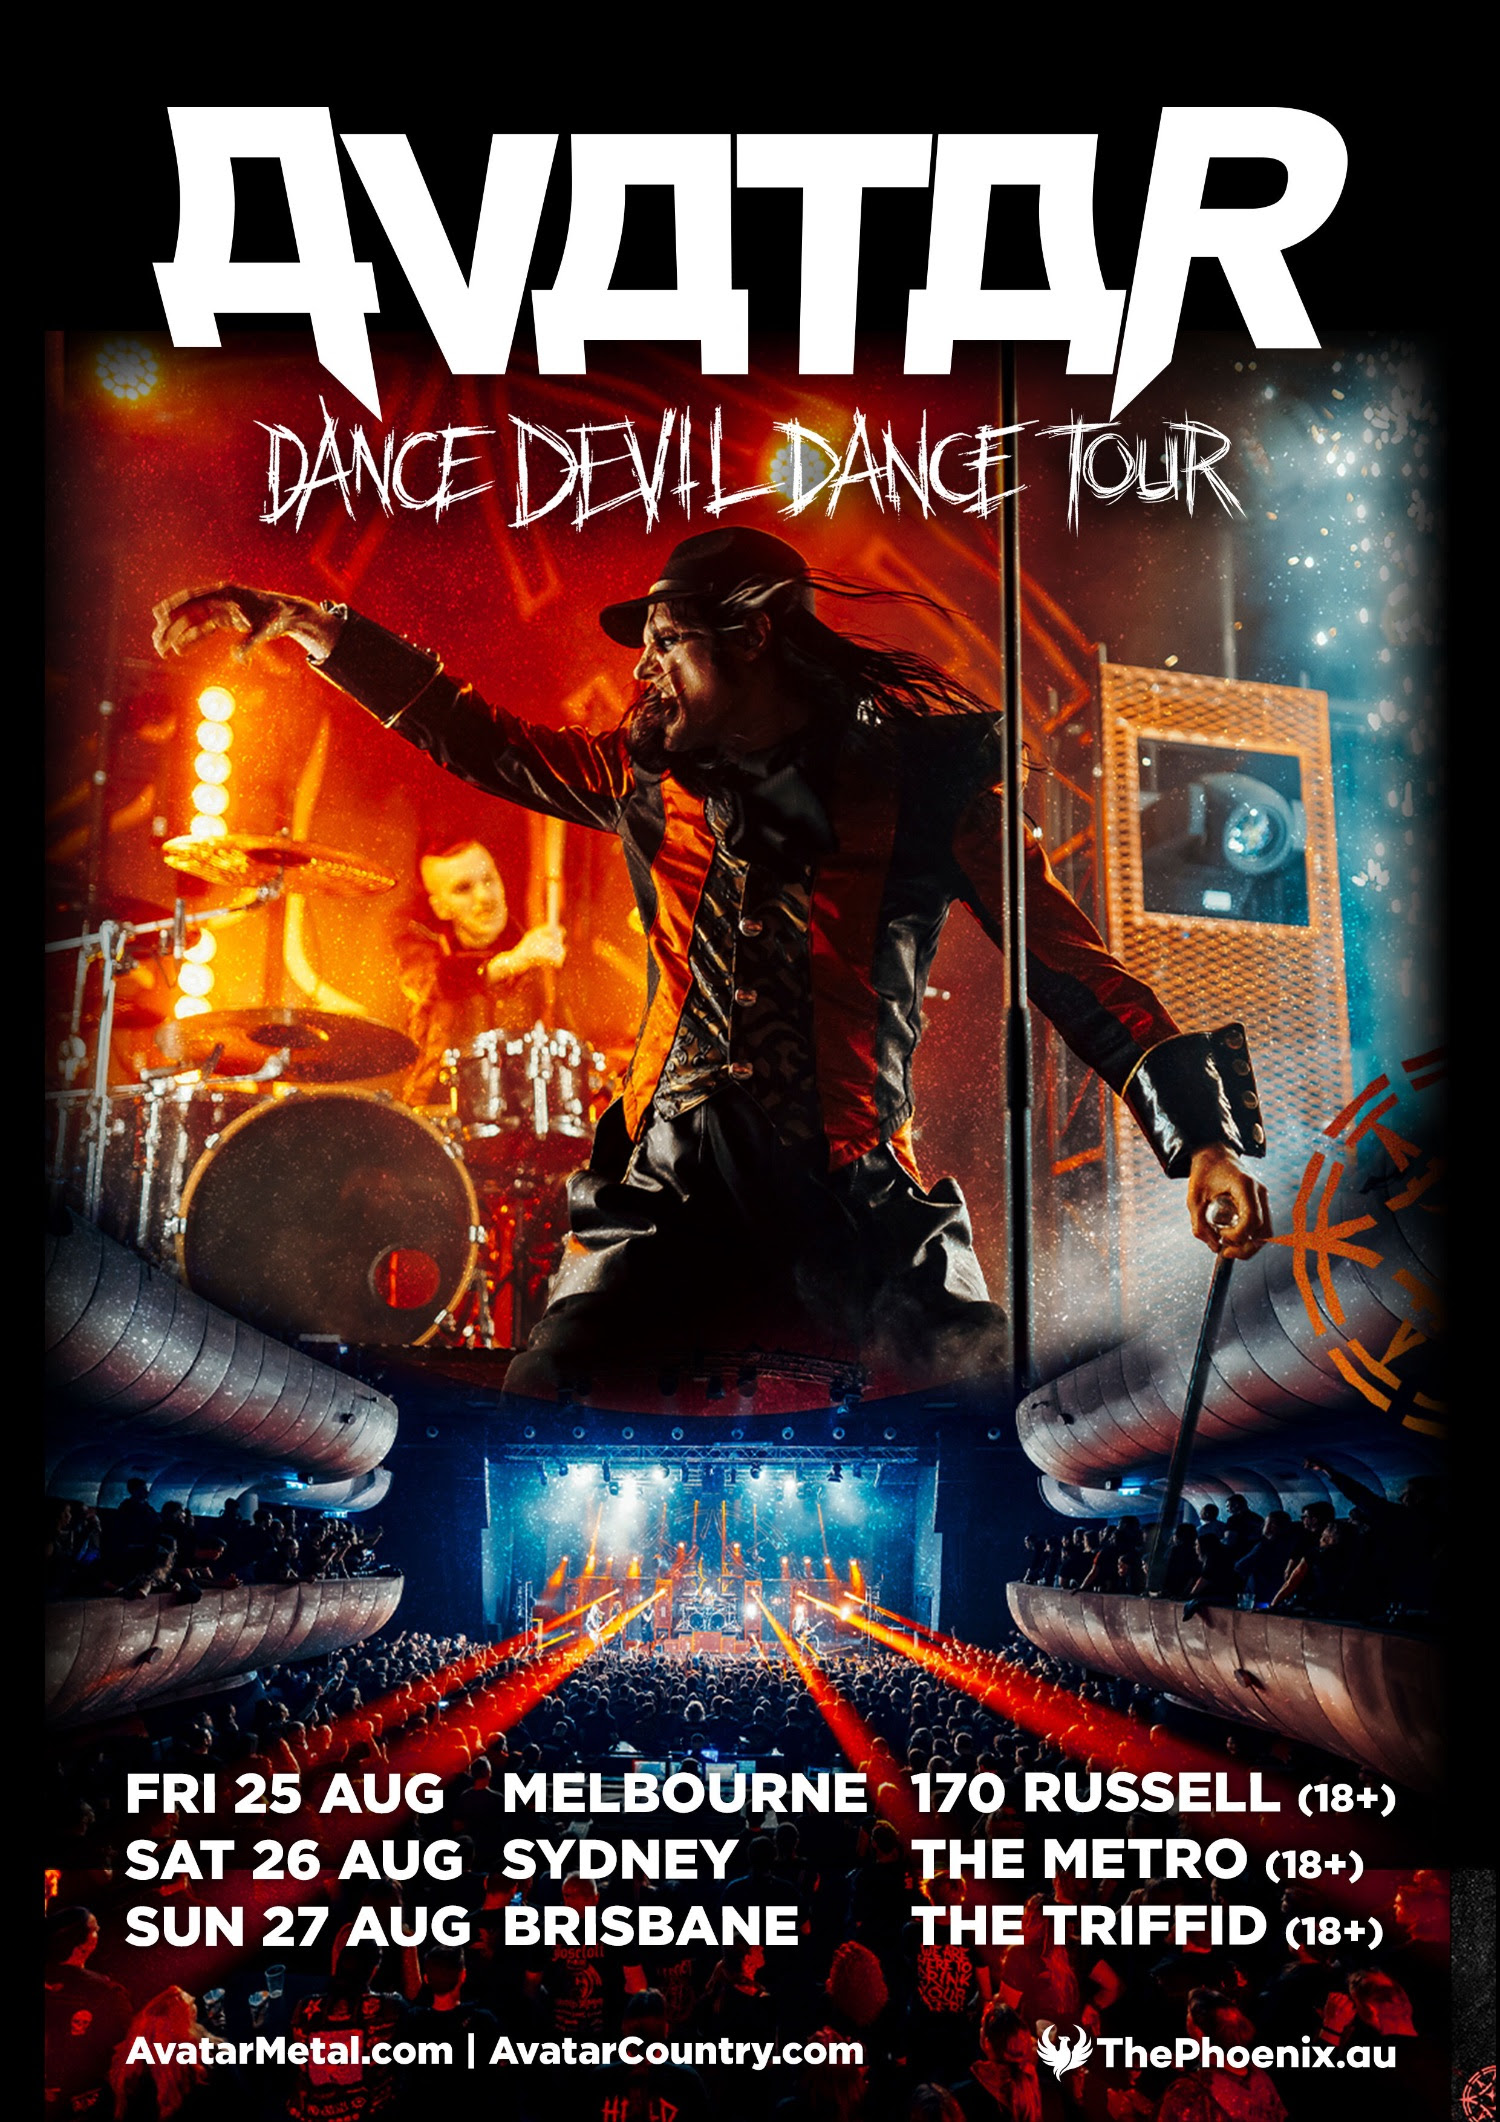 Tour poster - Avatar